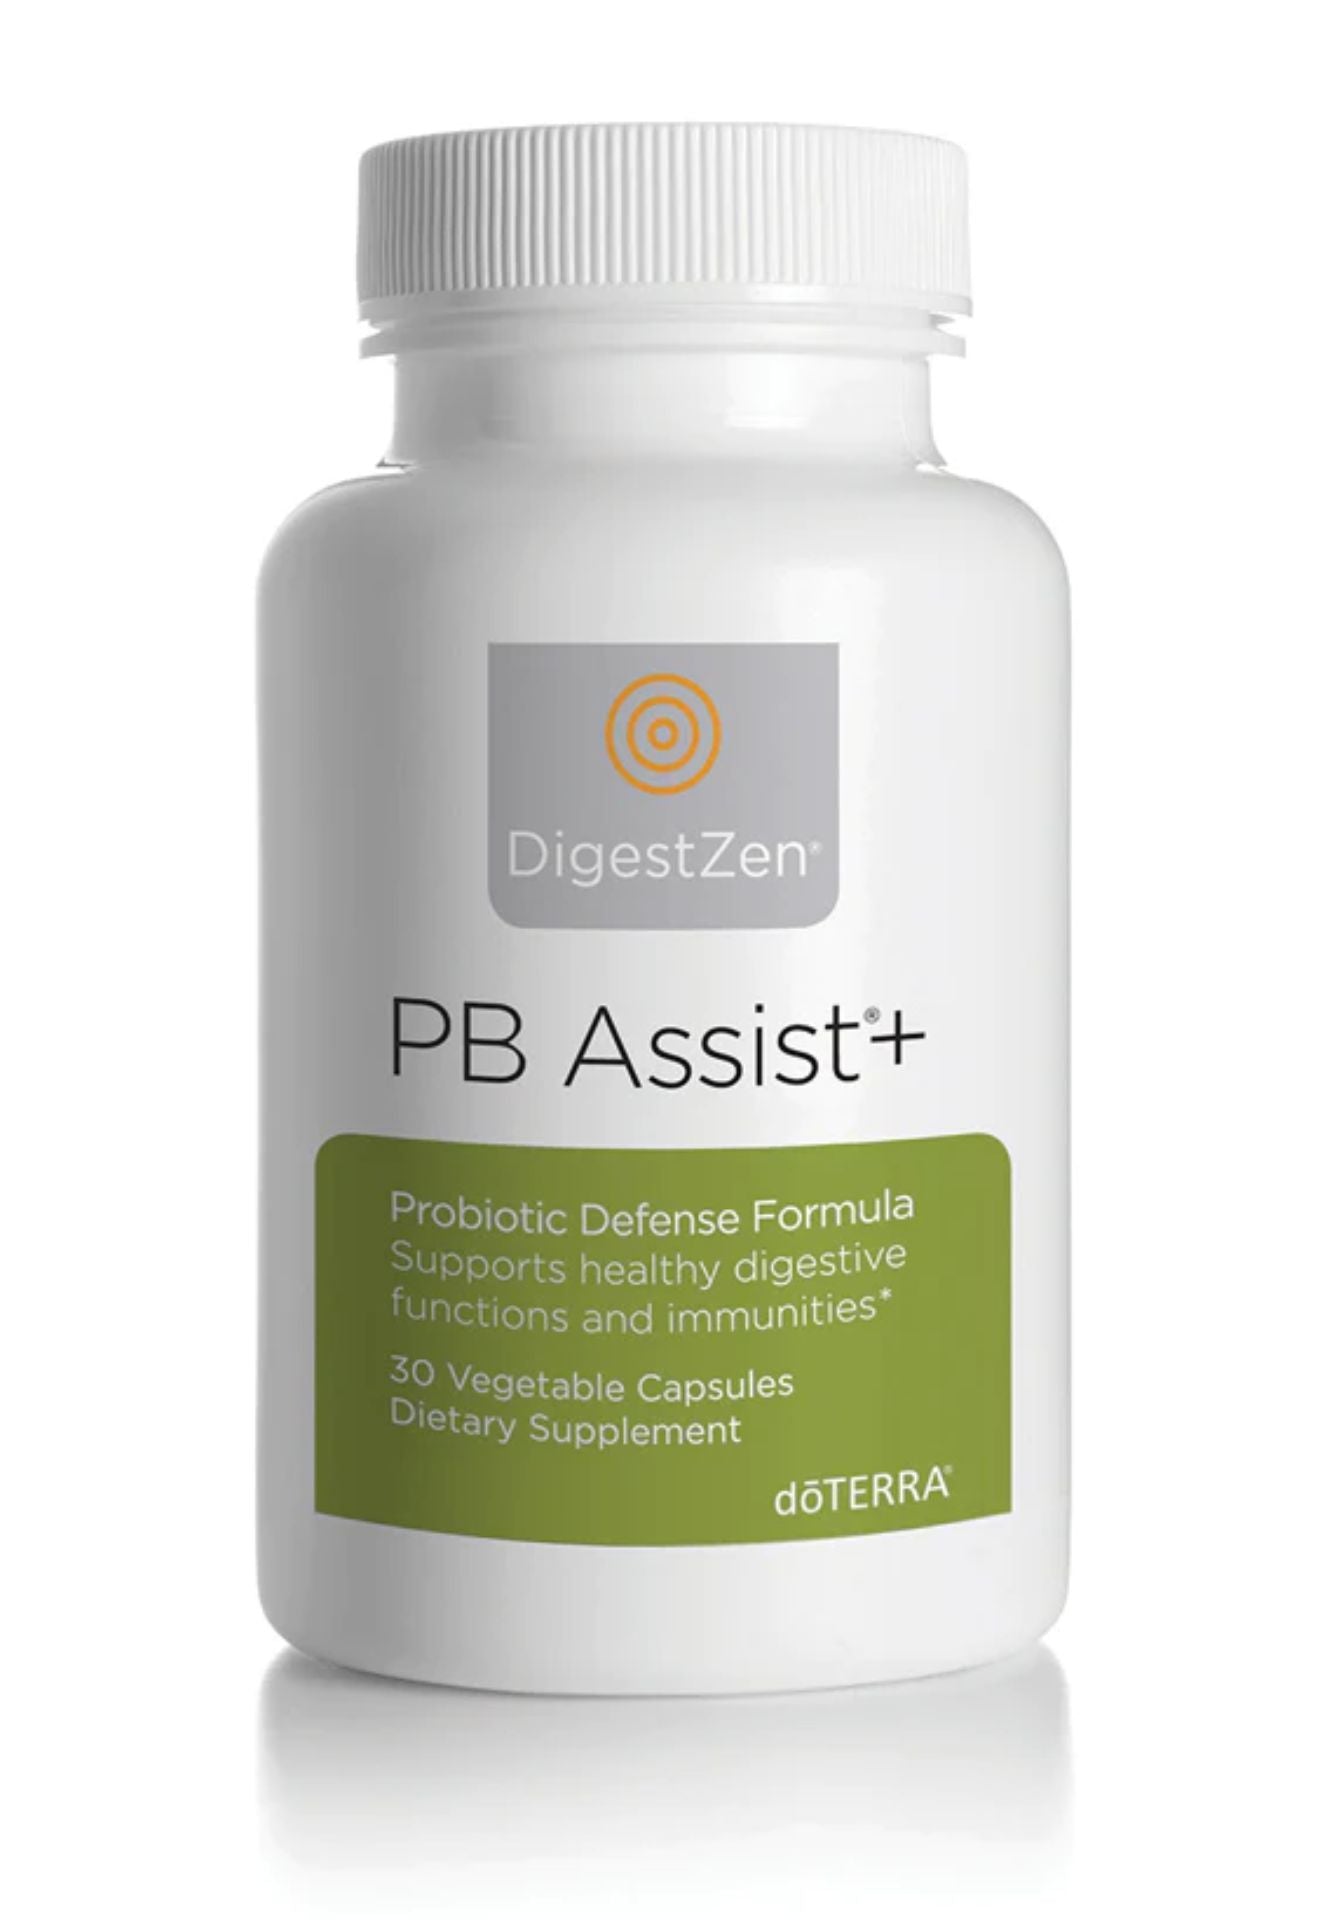 dōTERRA PB Assist+ Probiotic